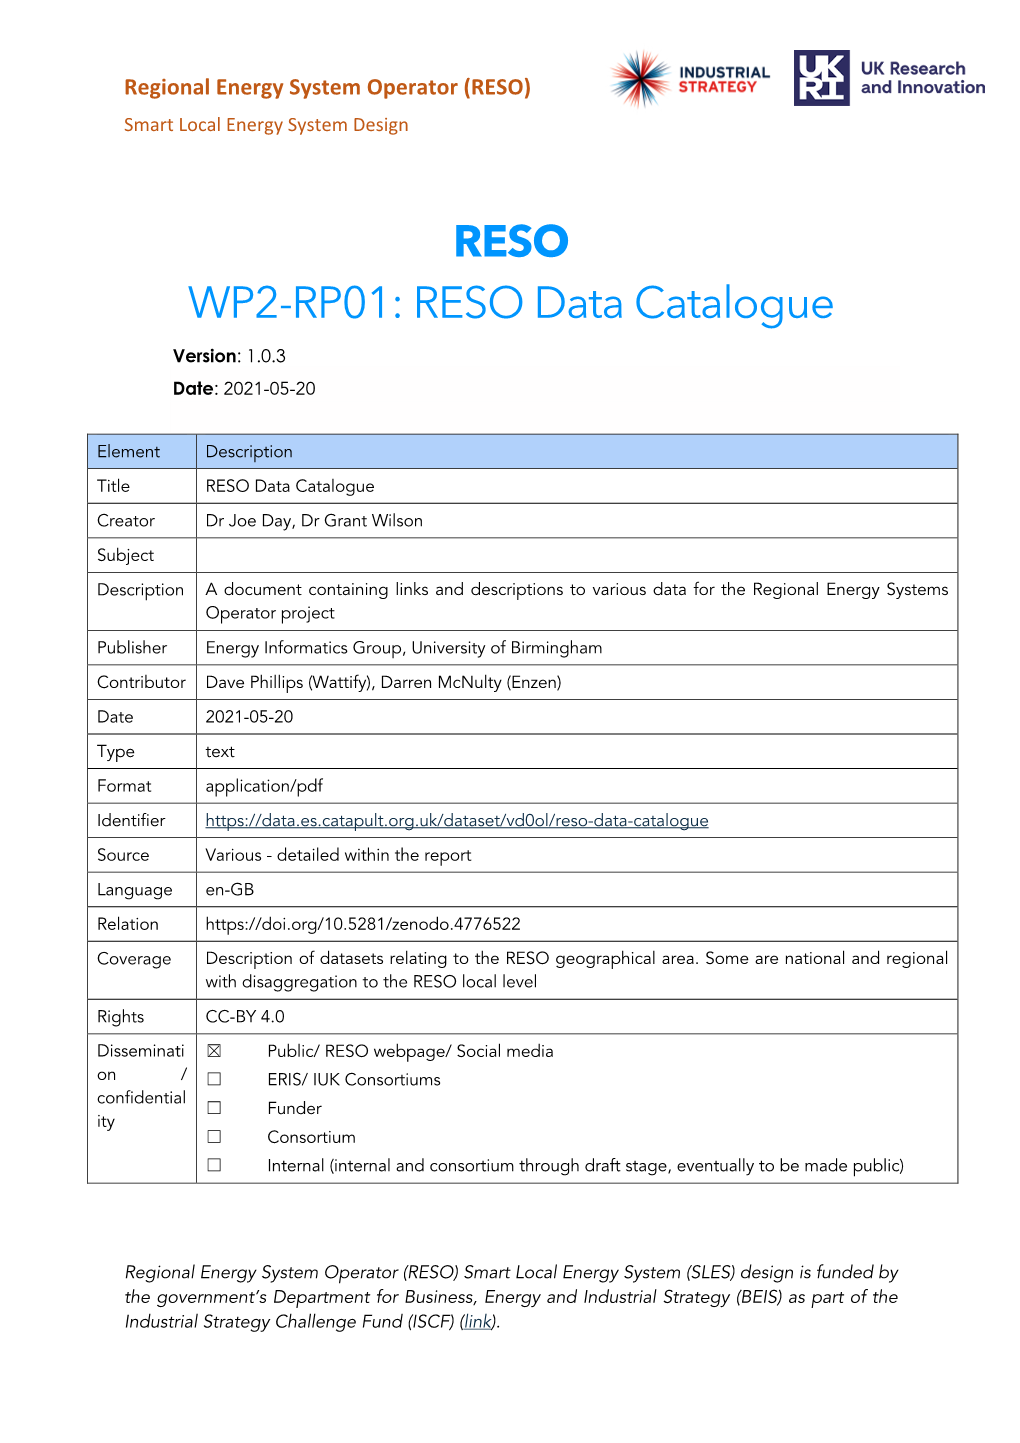 RESO WP2-RP01: RESO Data Catalogue Version: 1.0.3 Date: 2021-05-20